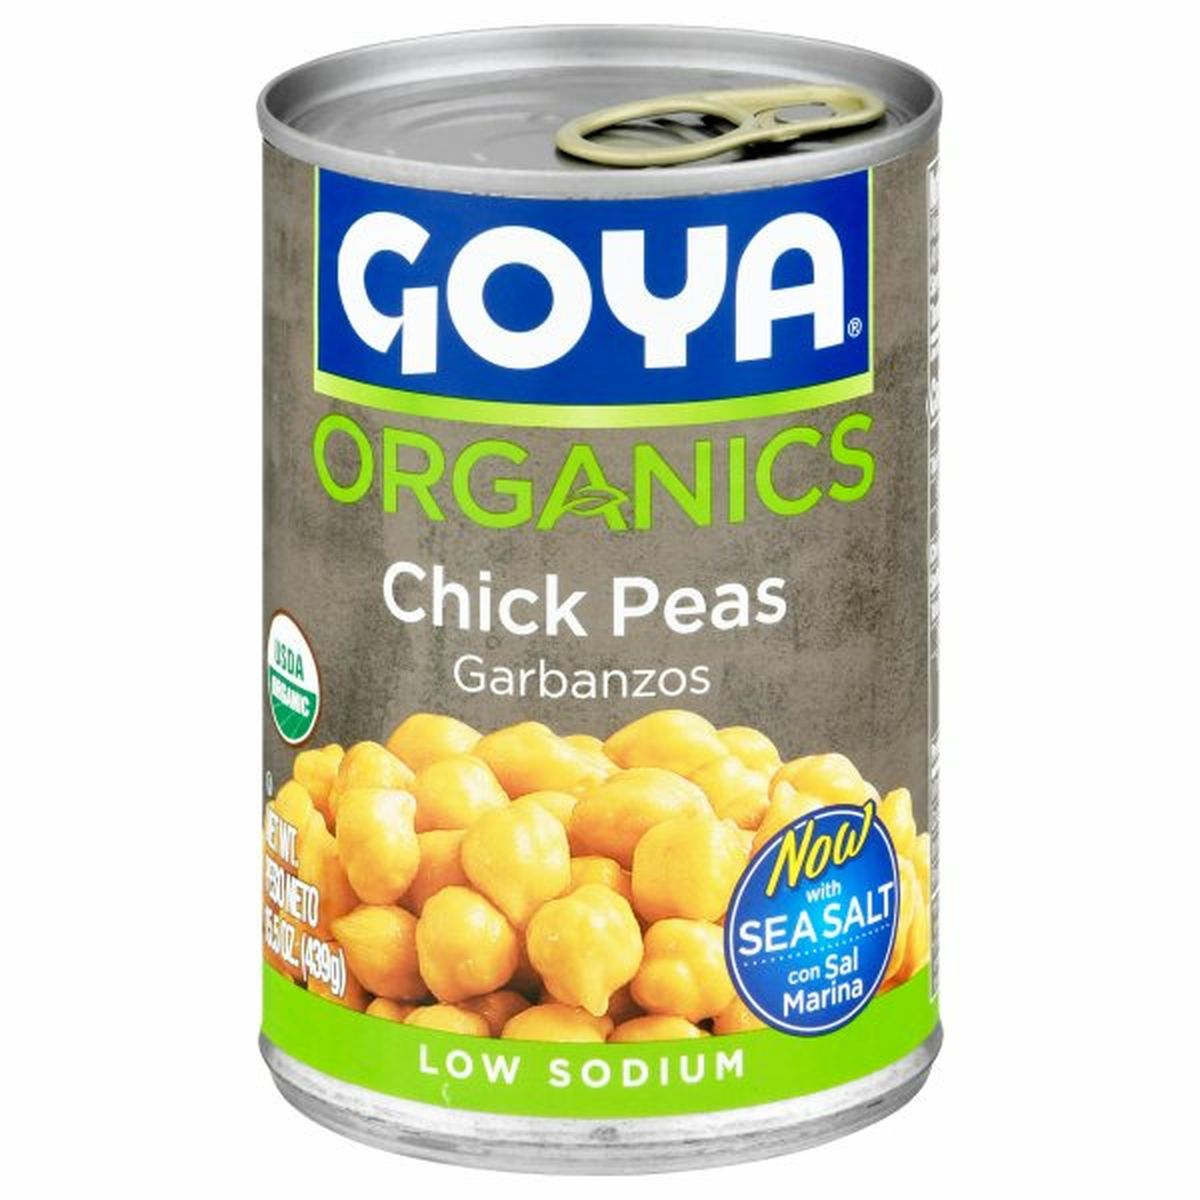 Calories in Goya Organics Chick Peas, Low Sodium